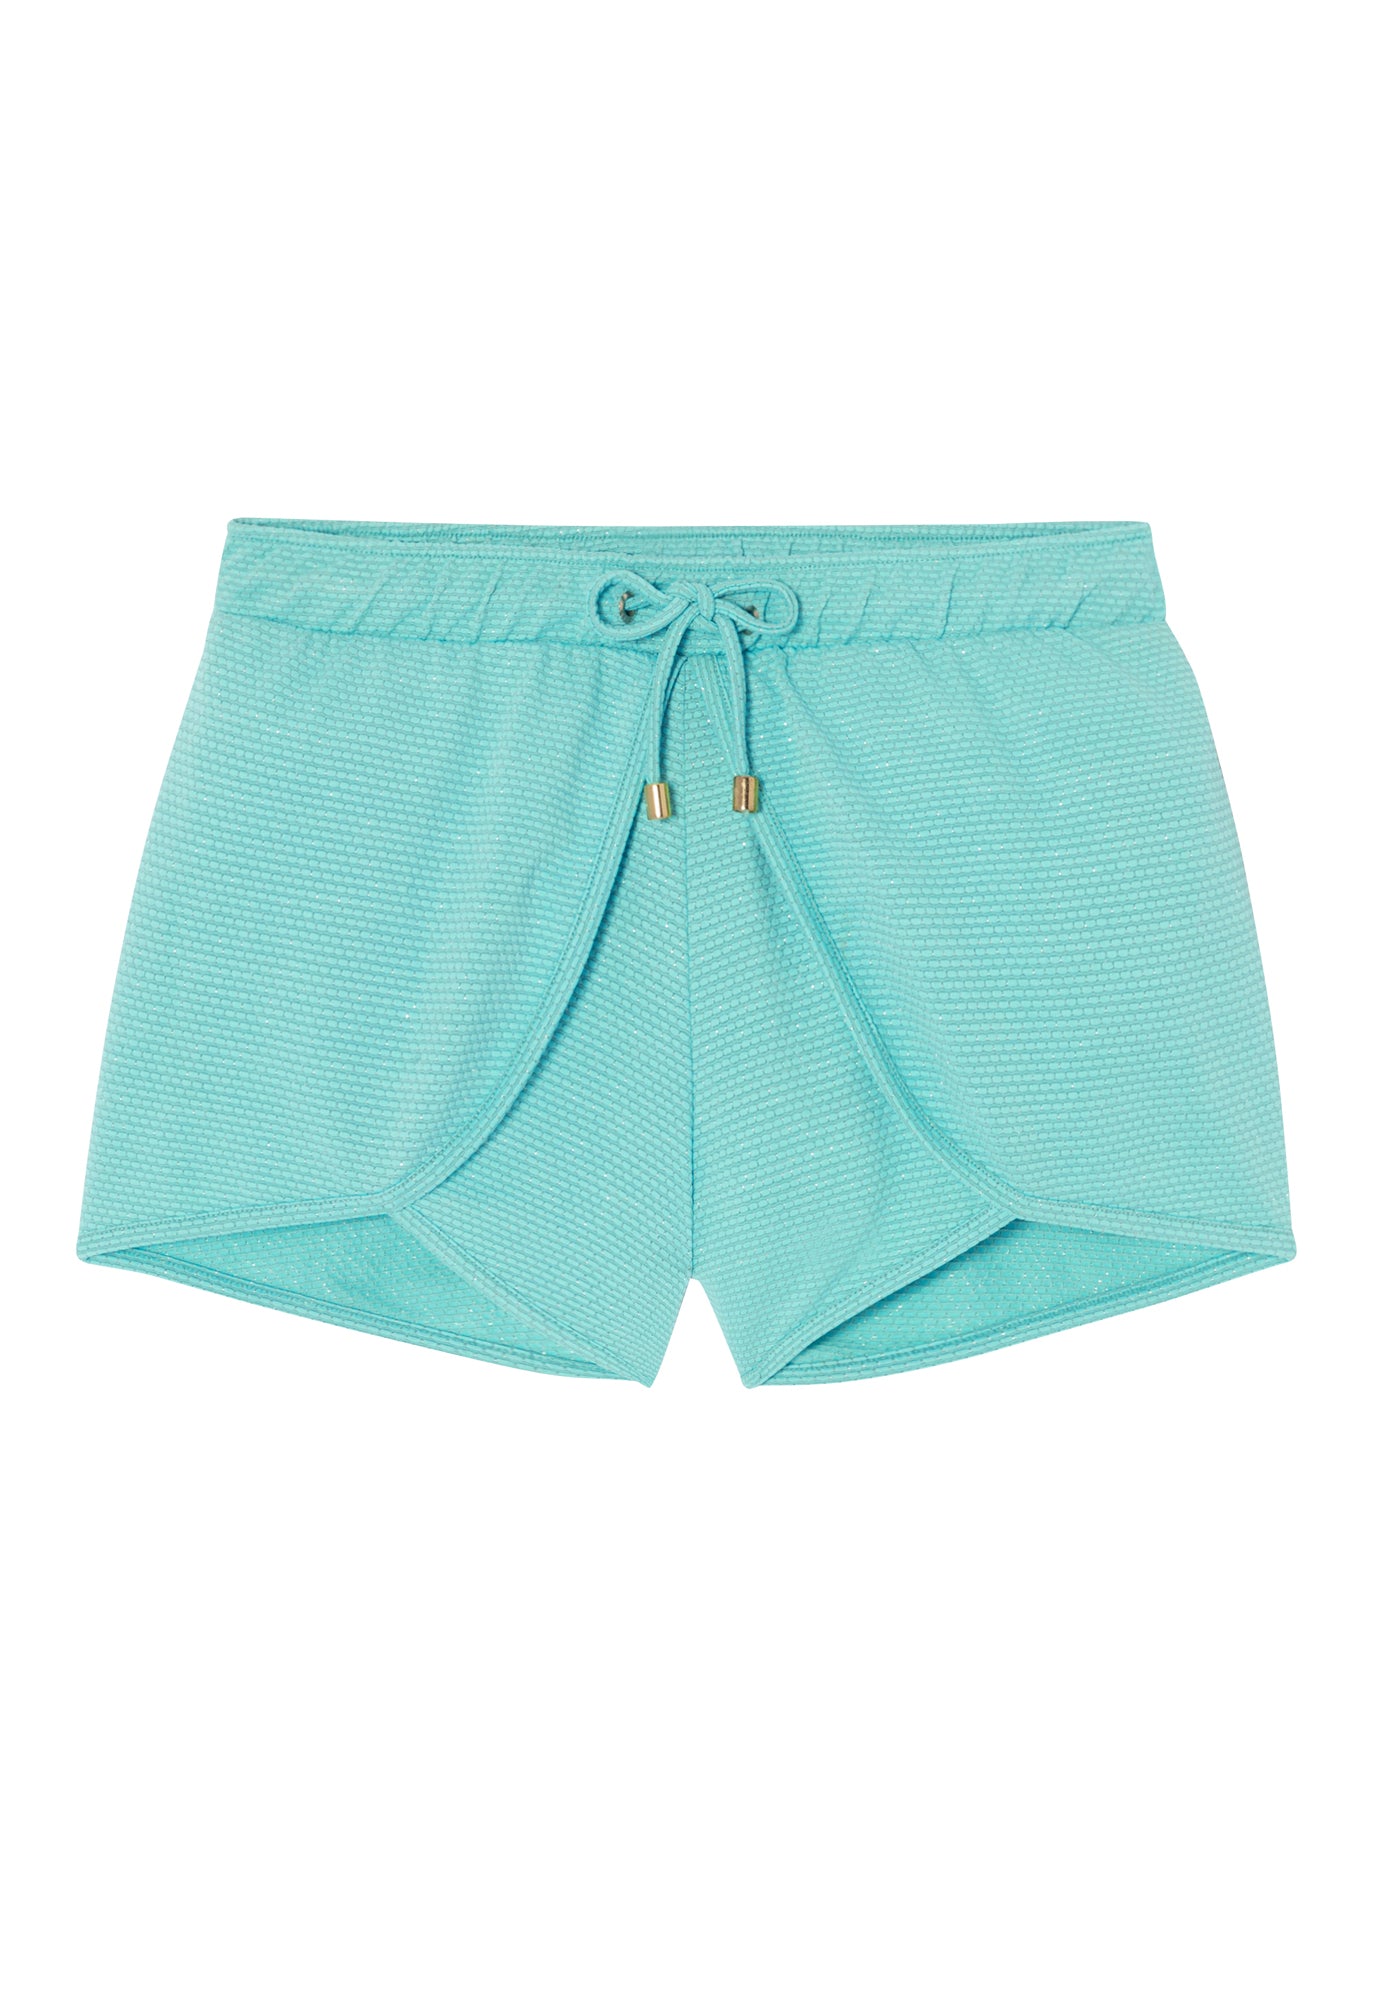 Girls' swim shorts, aqua/gold